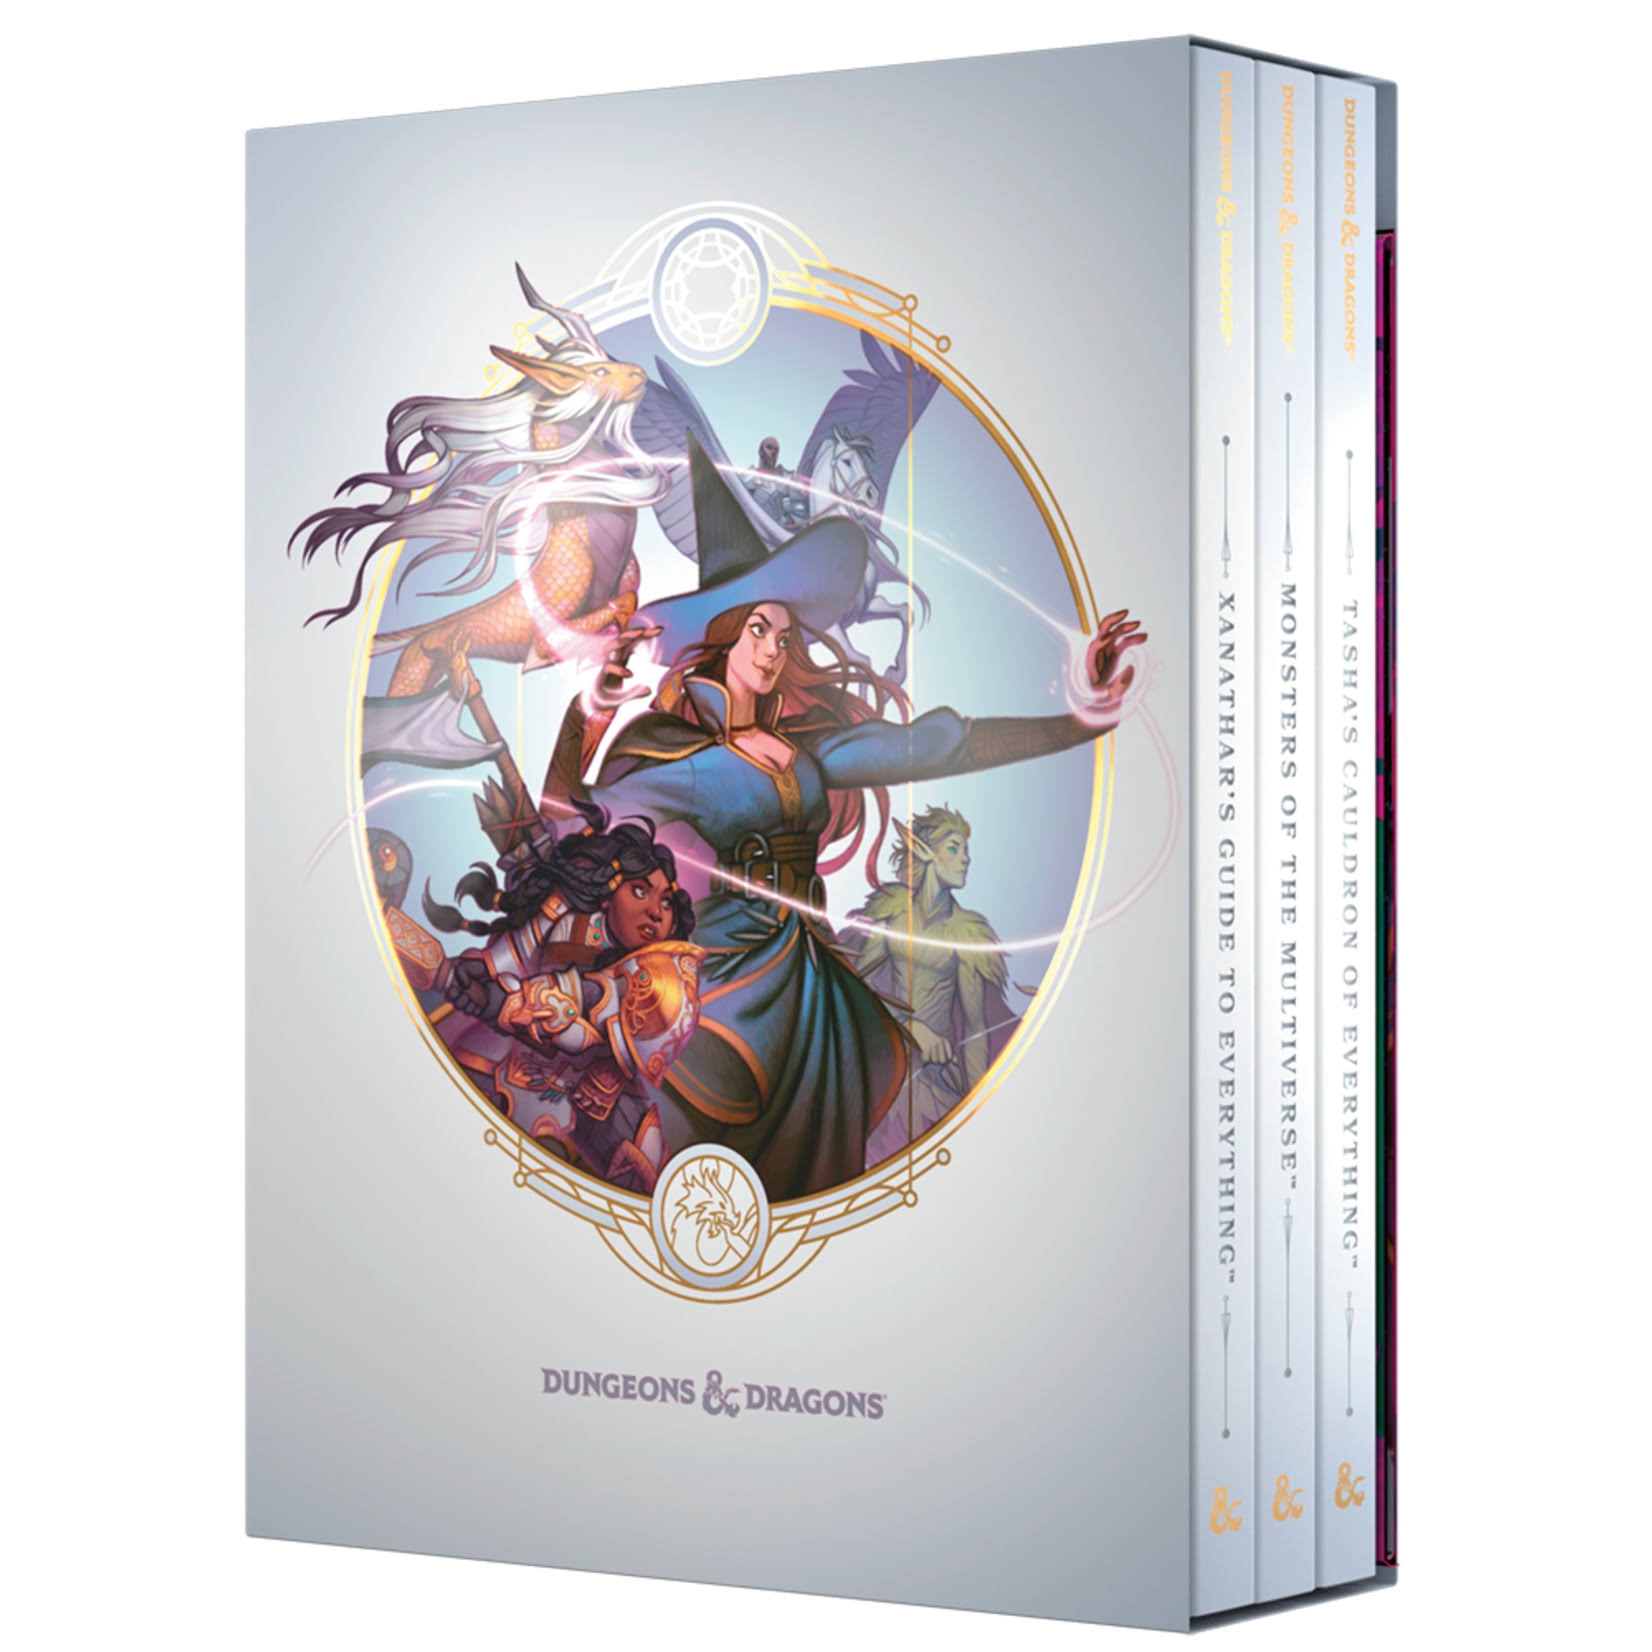 D&D Dungeons & Dragons Regular Rules Expansion Gift Set Alternative Cover